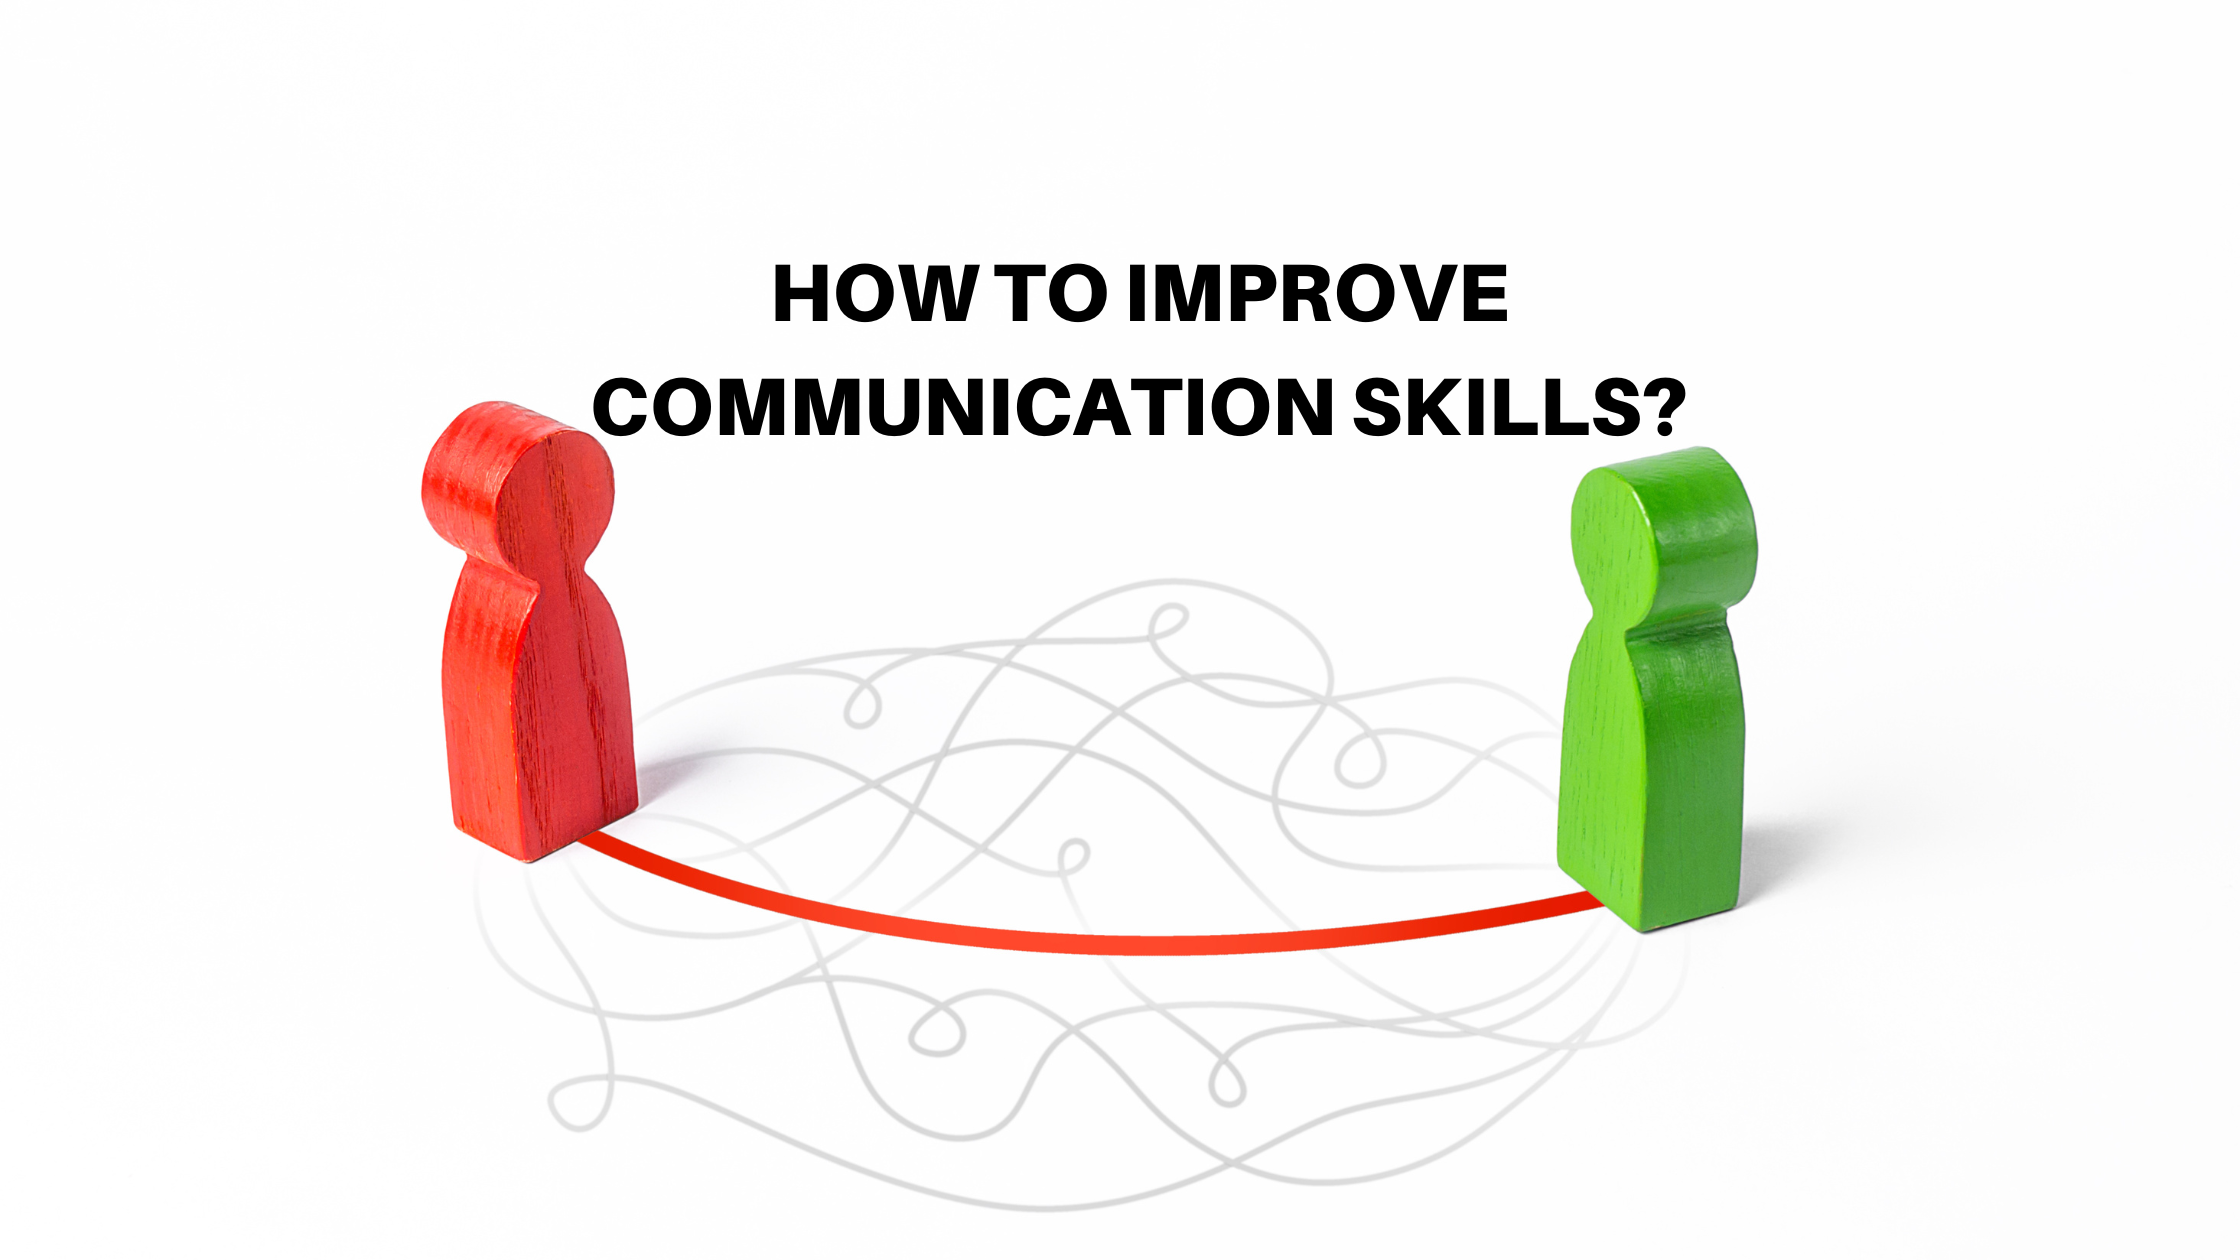 How to Improve Communication Skills